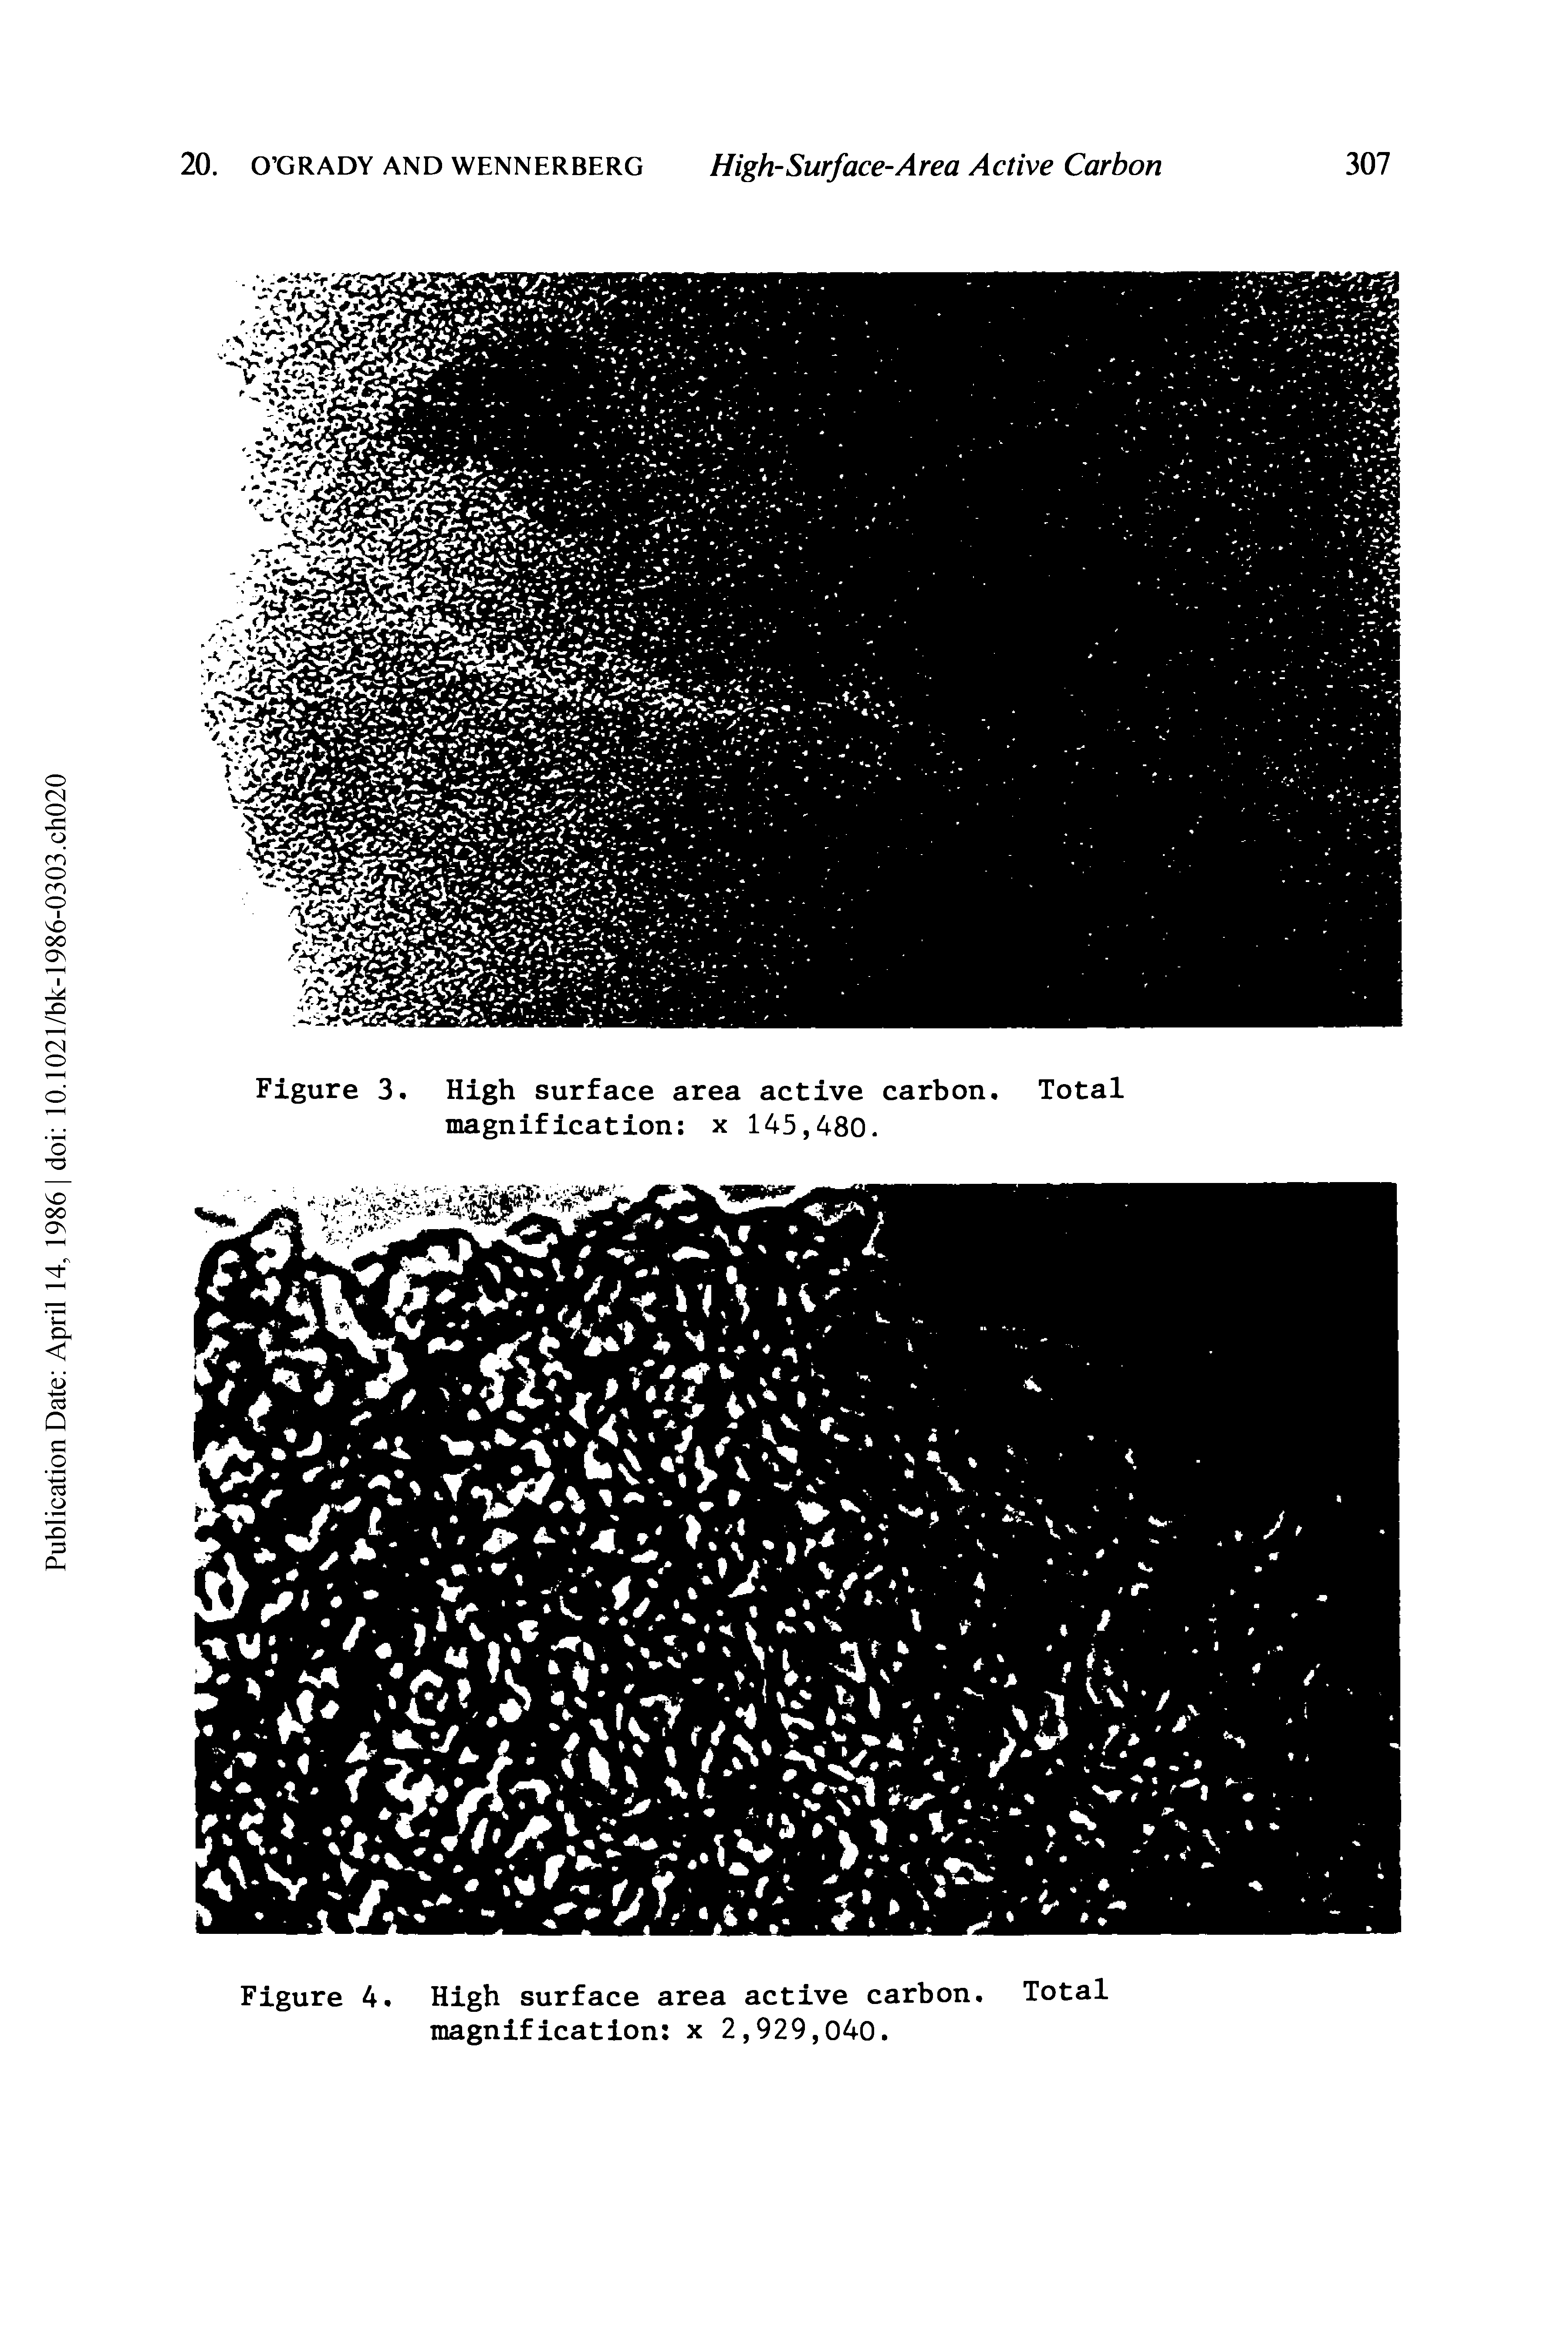 Figure 3. High surface area active carbon. Total magnification x 145,480.